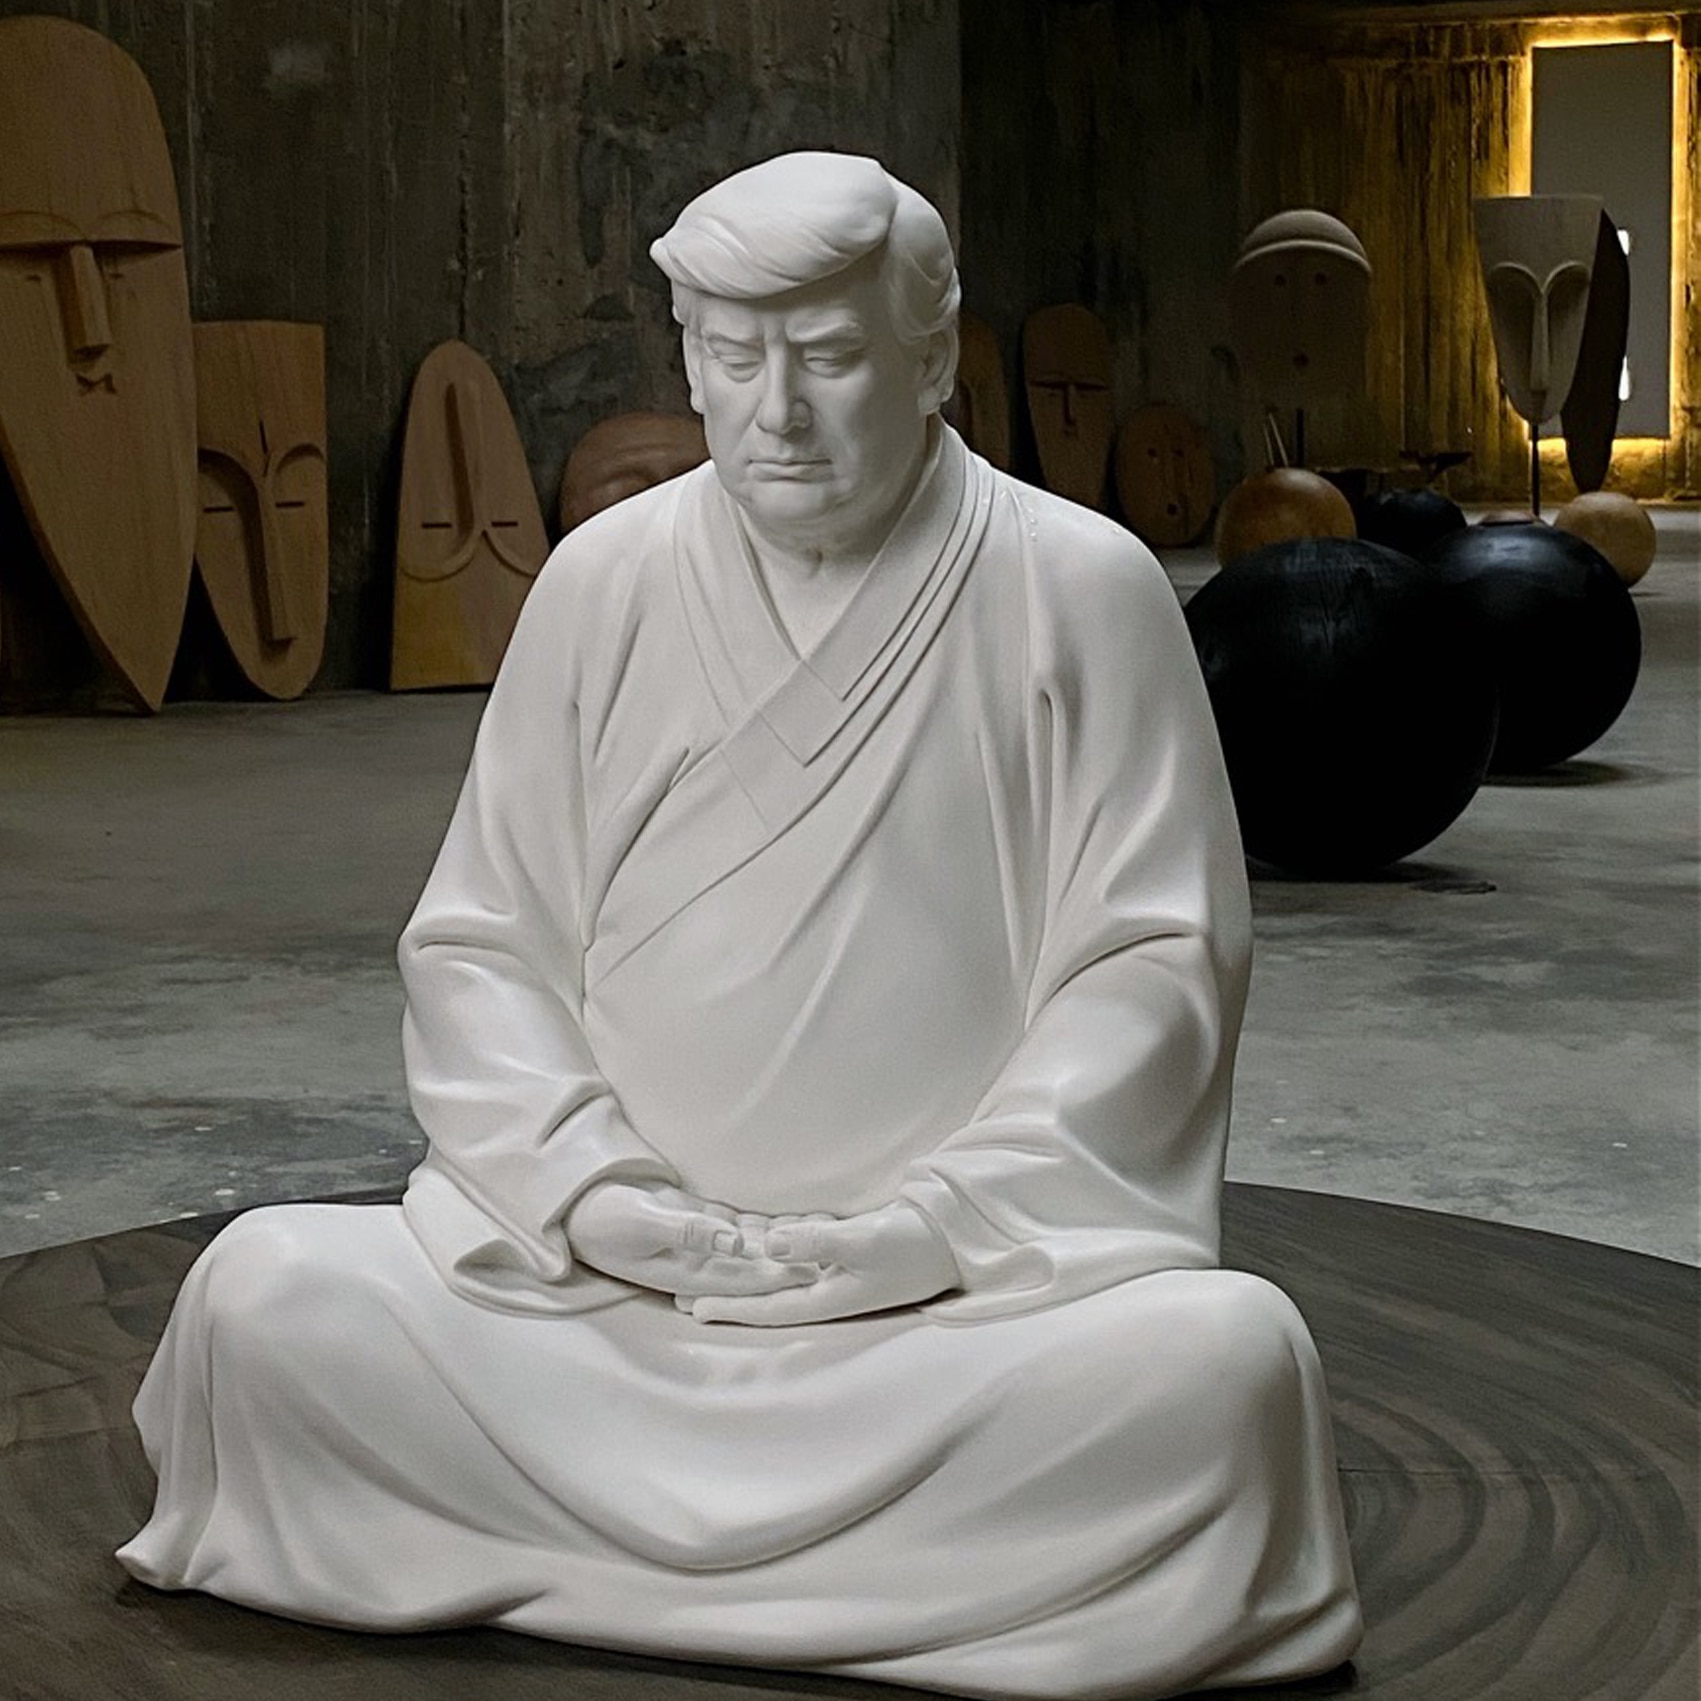 This Donald Trump buddha